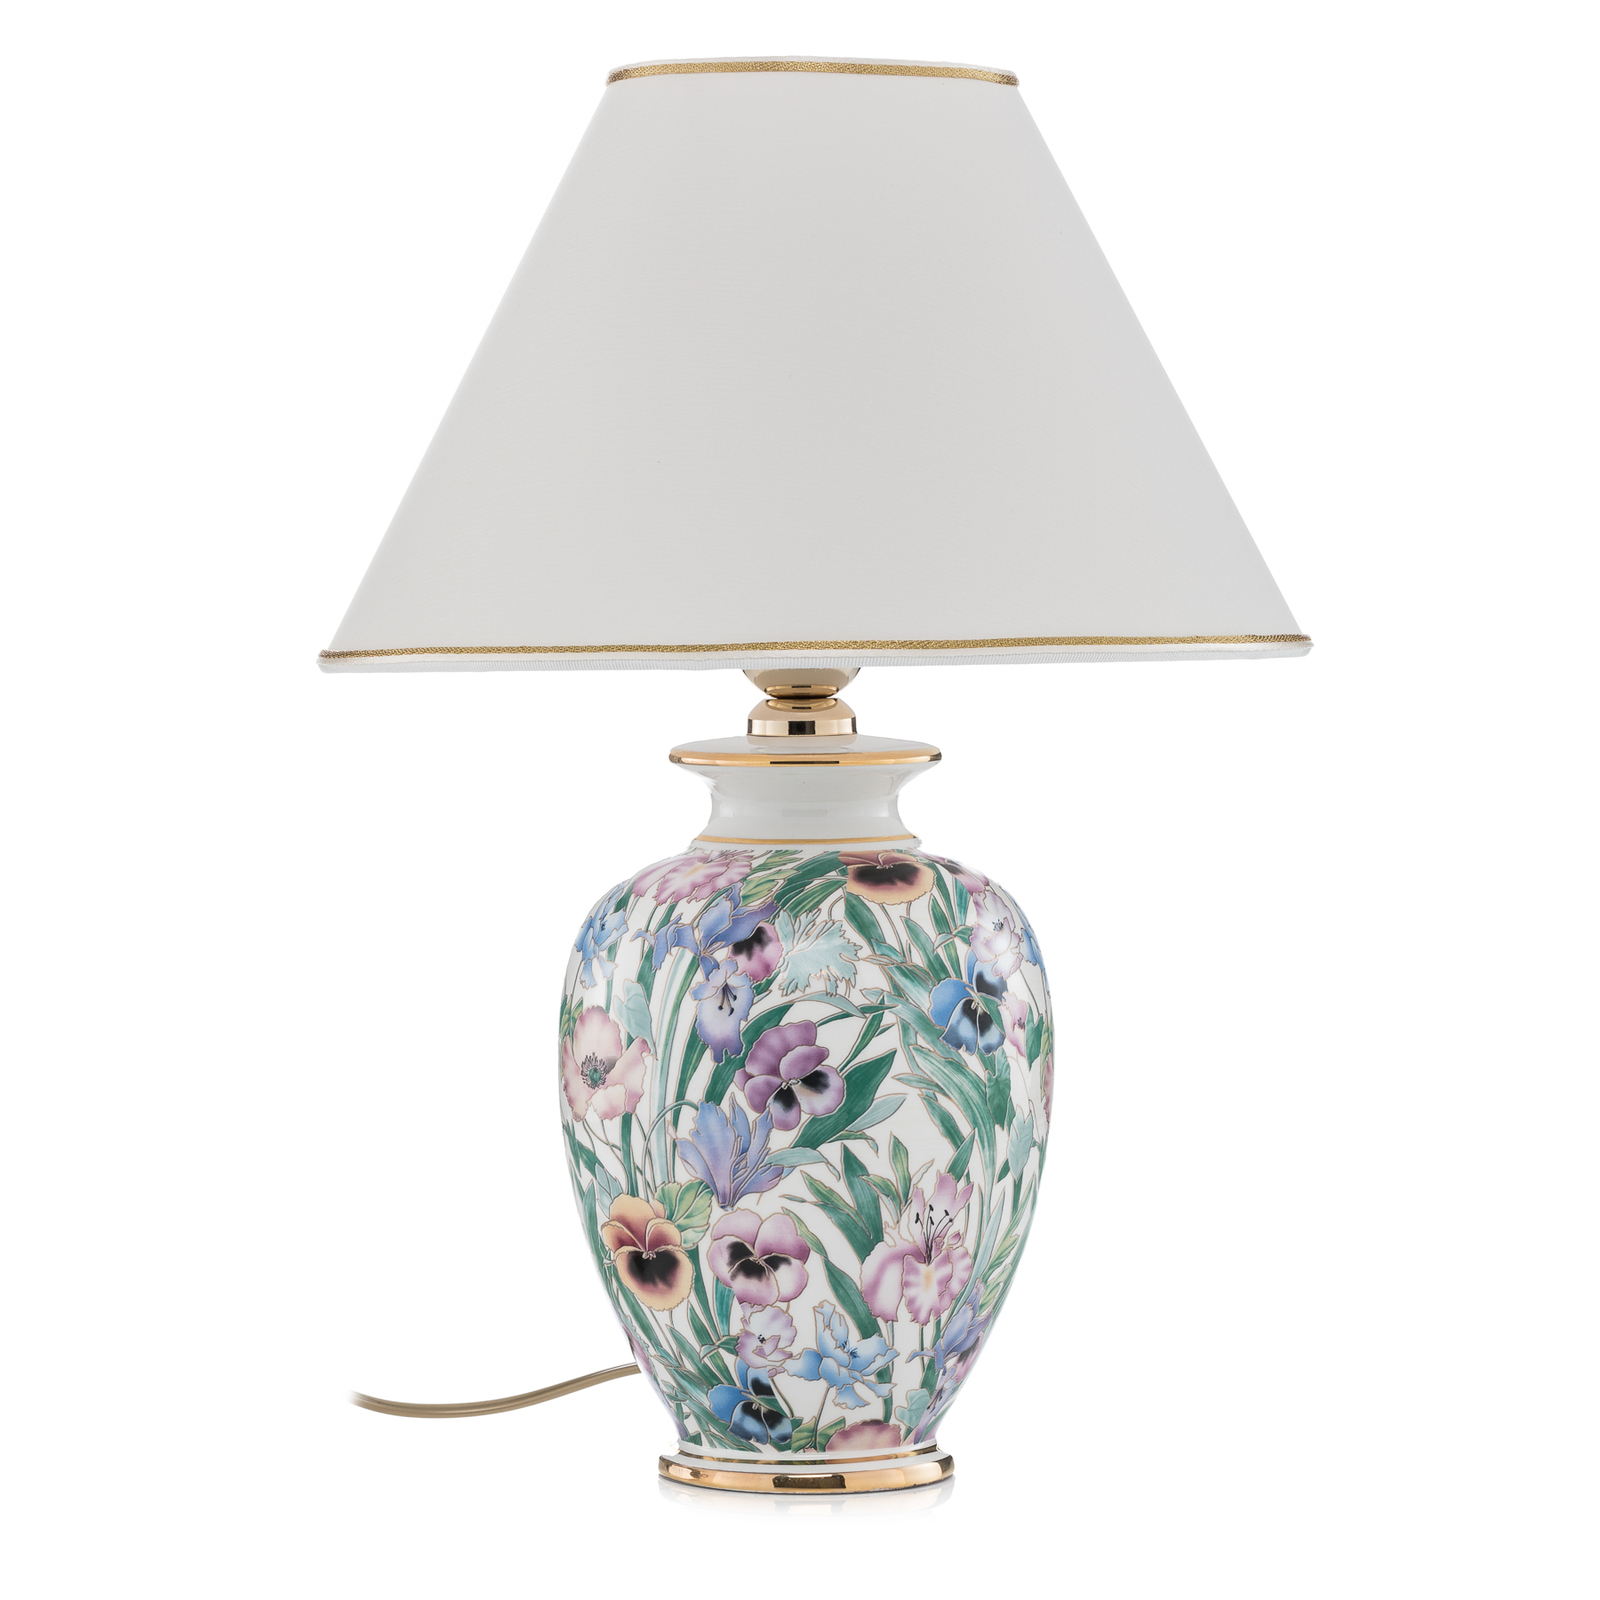 KOLARZ Giardino Panse - floral table lamp, 30 cm